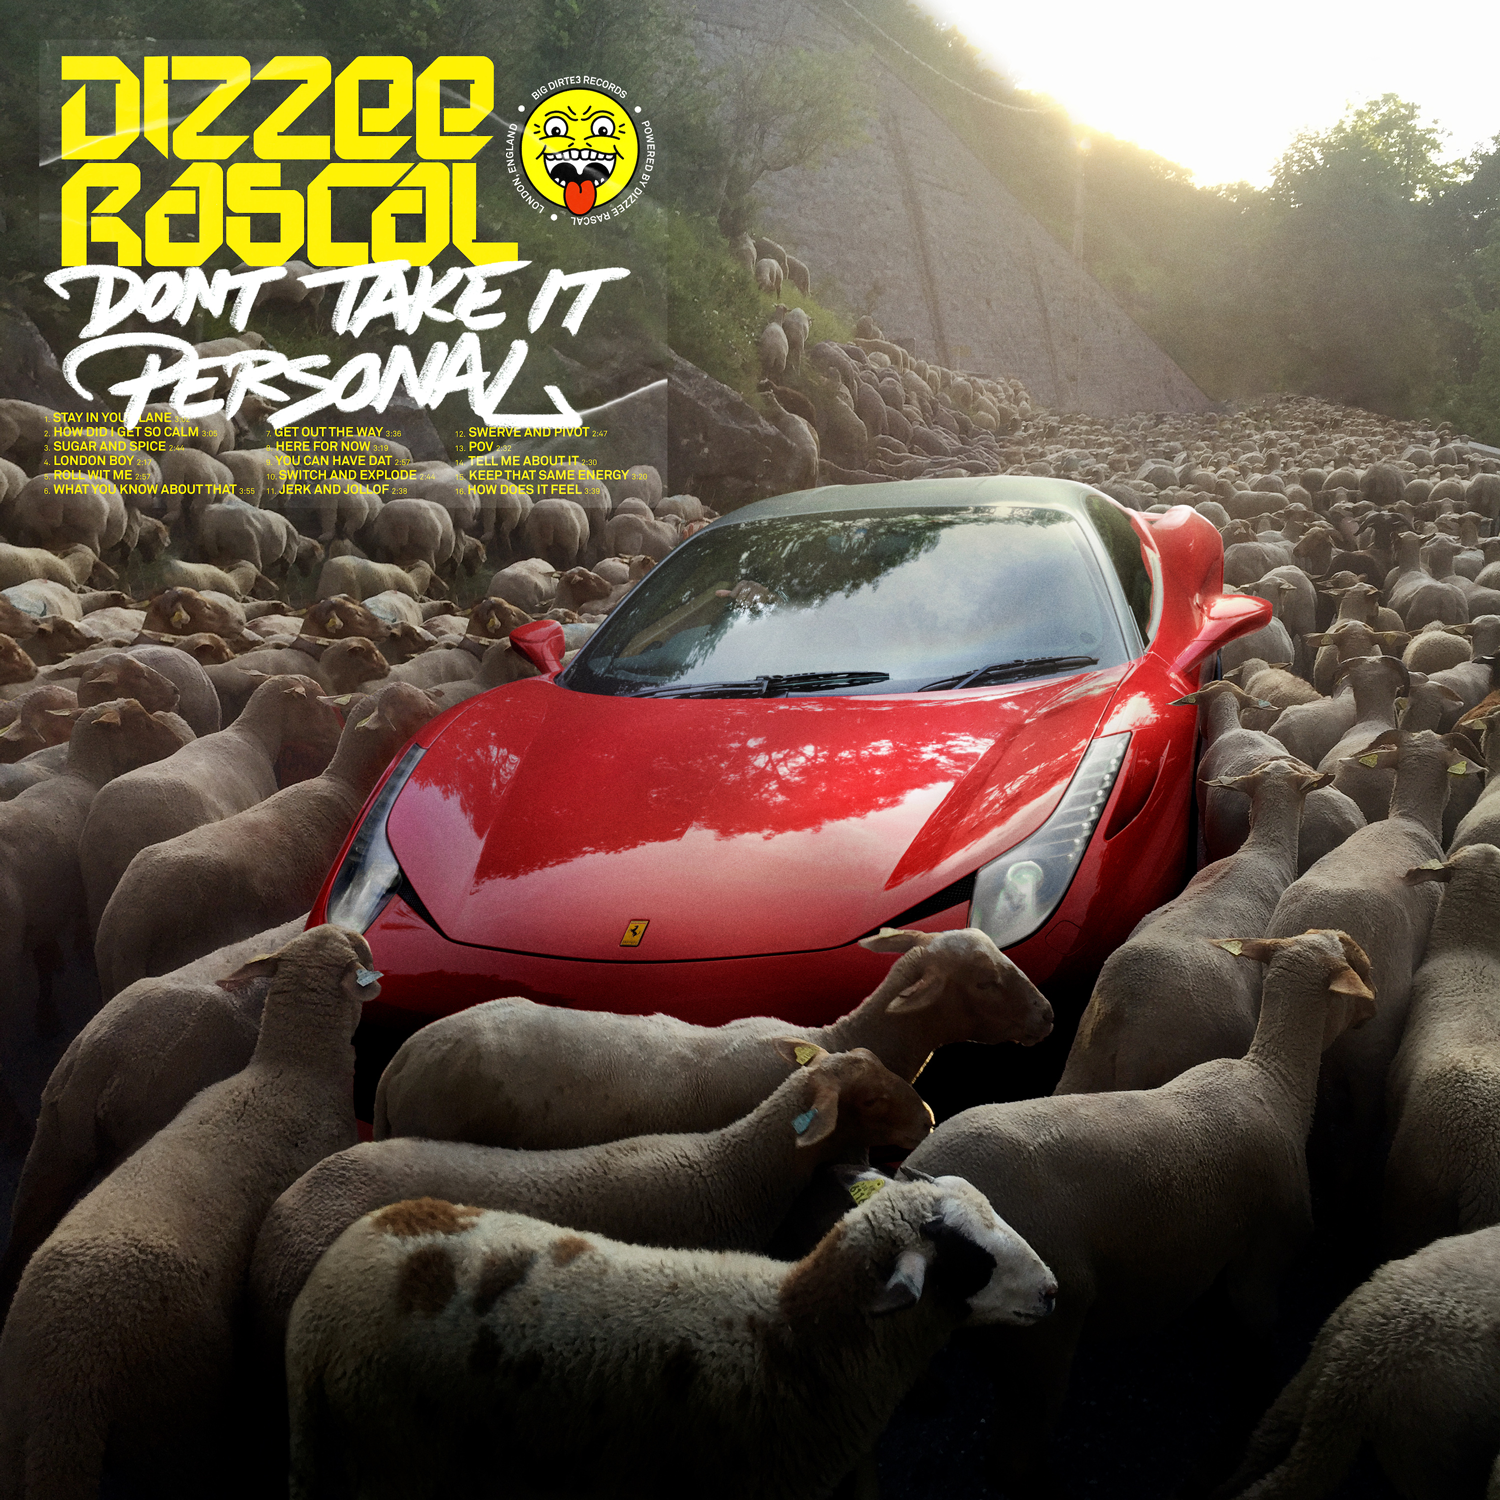 Dizzee Rascal - Don't Take It Personal: Limited Red/Yellow Splatter Vinyl LP